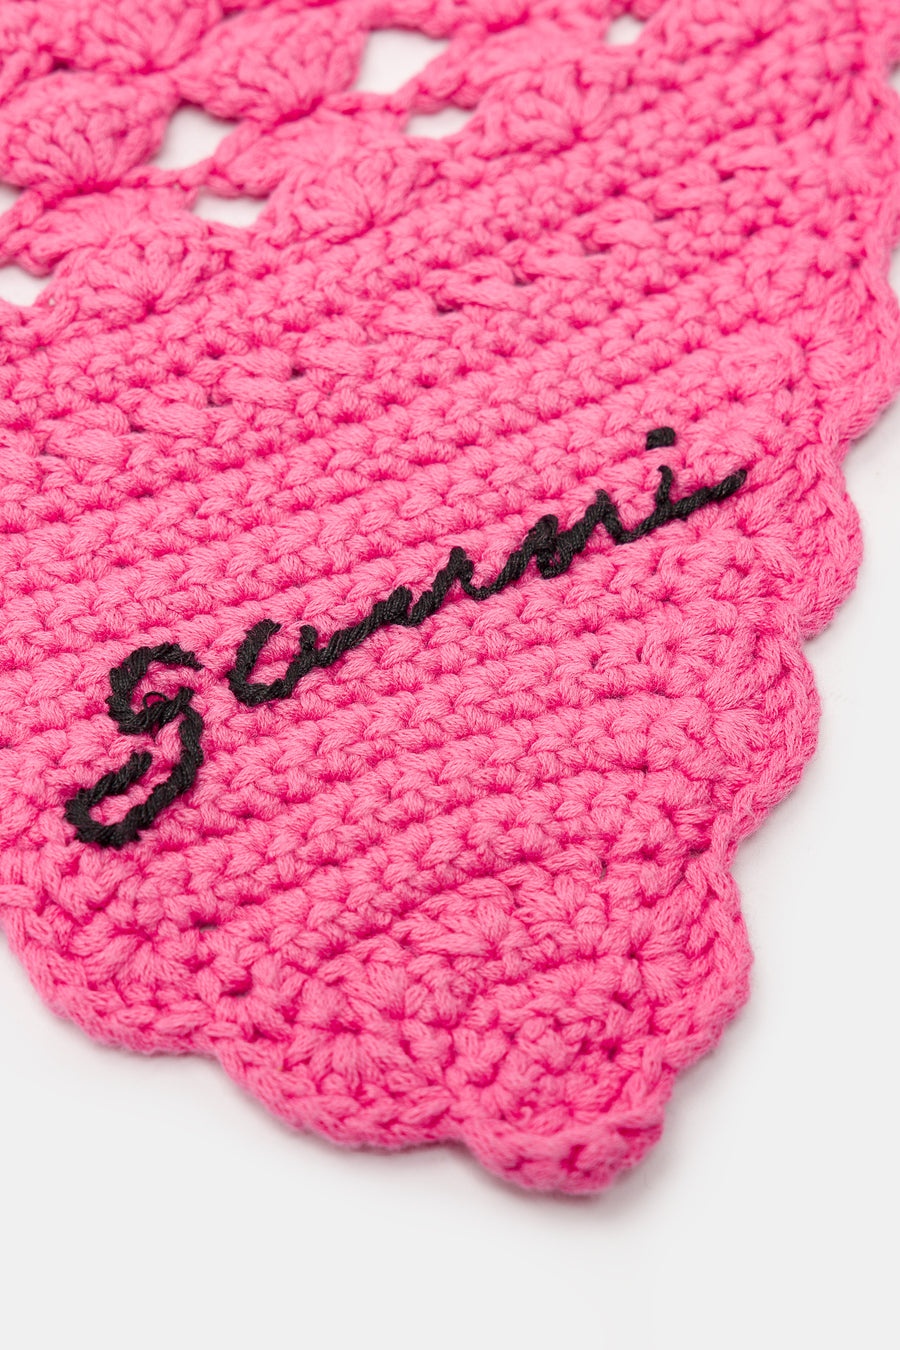 Cotton Crochet Bandana in Shocking Pink - 3